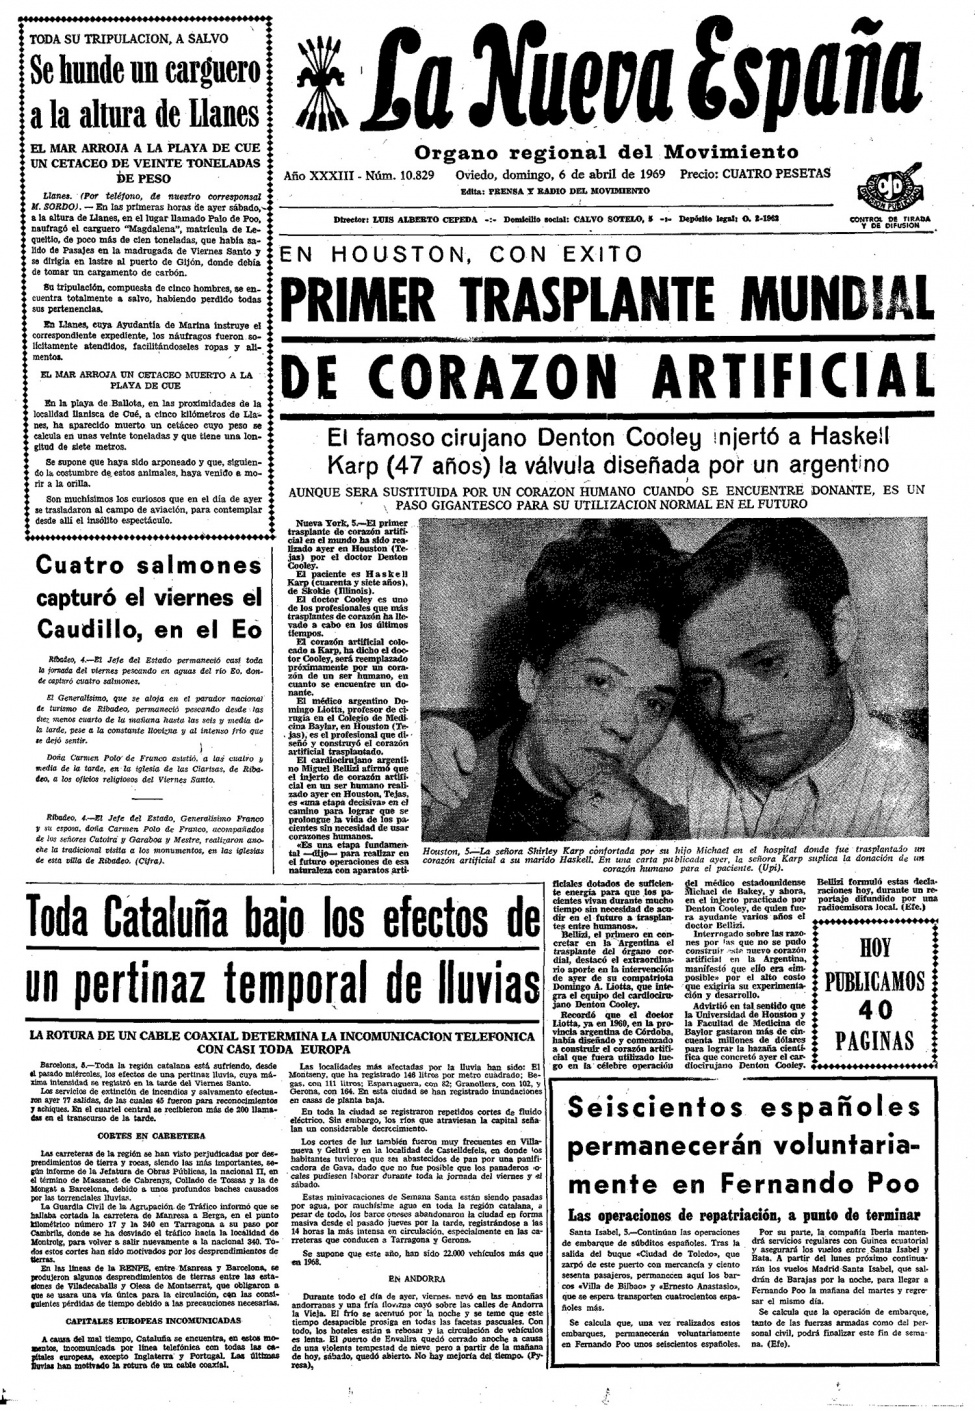 Portada del Domingo, 6 de Abril de 1969